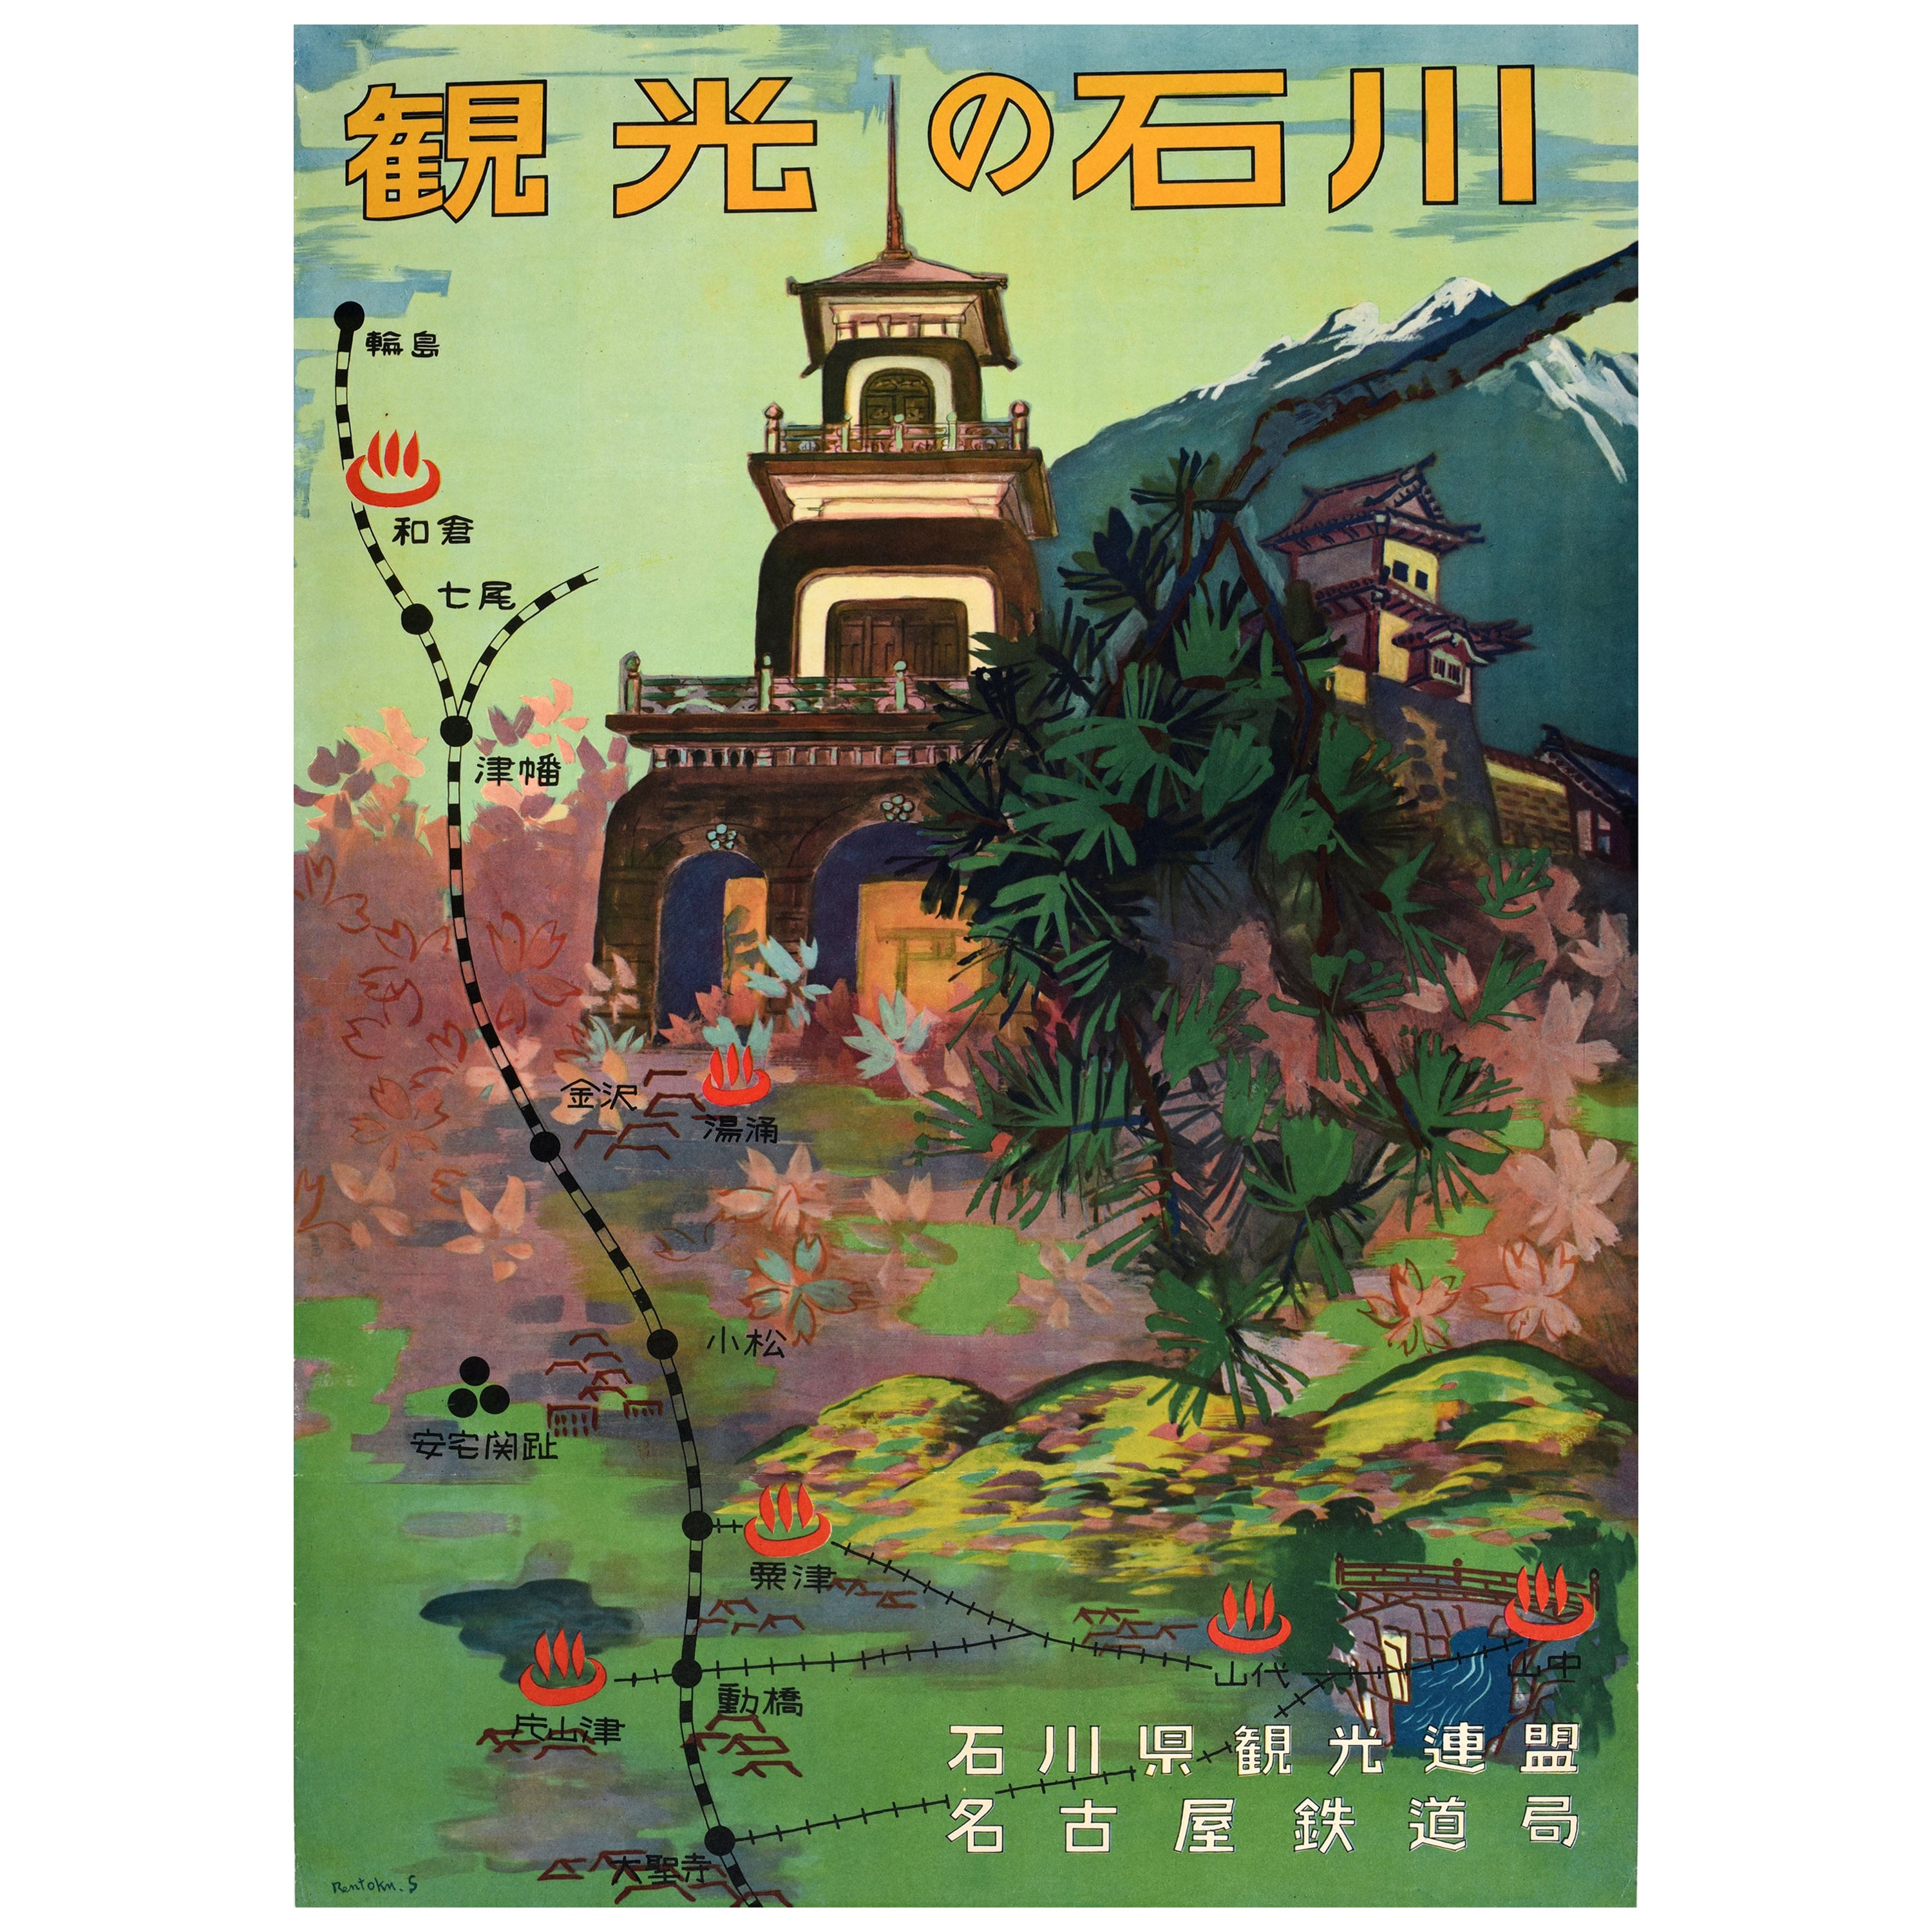 Original Vintage Travel Poster Ishikawa Nagoya Railway Japan Kanazawa Castle For Sale